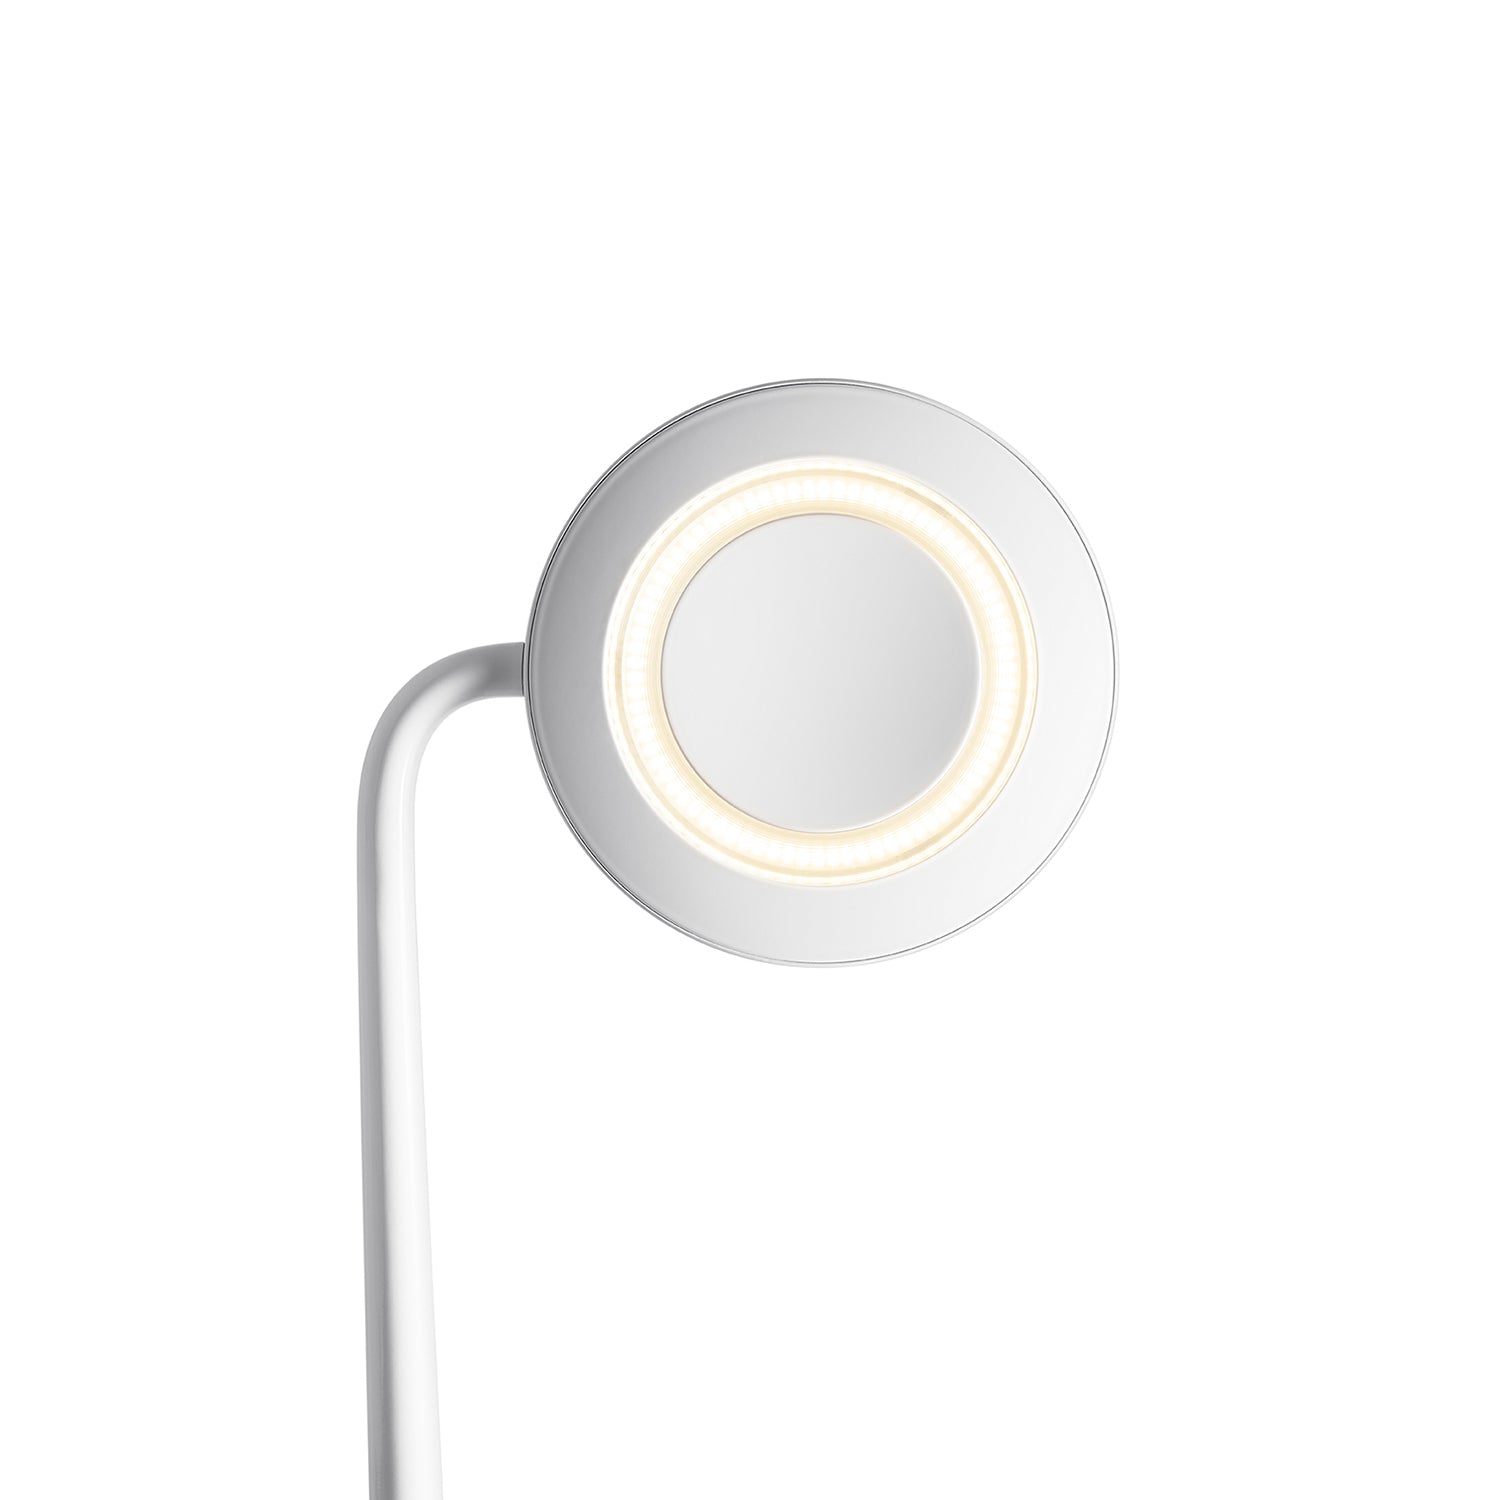 Pixo Plus Task Light with Wireless Charging: White